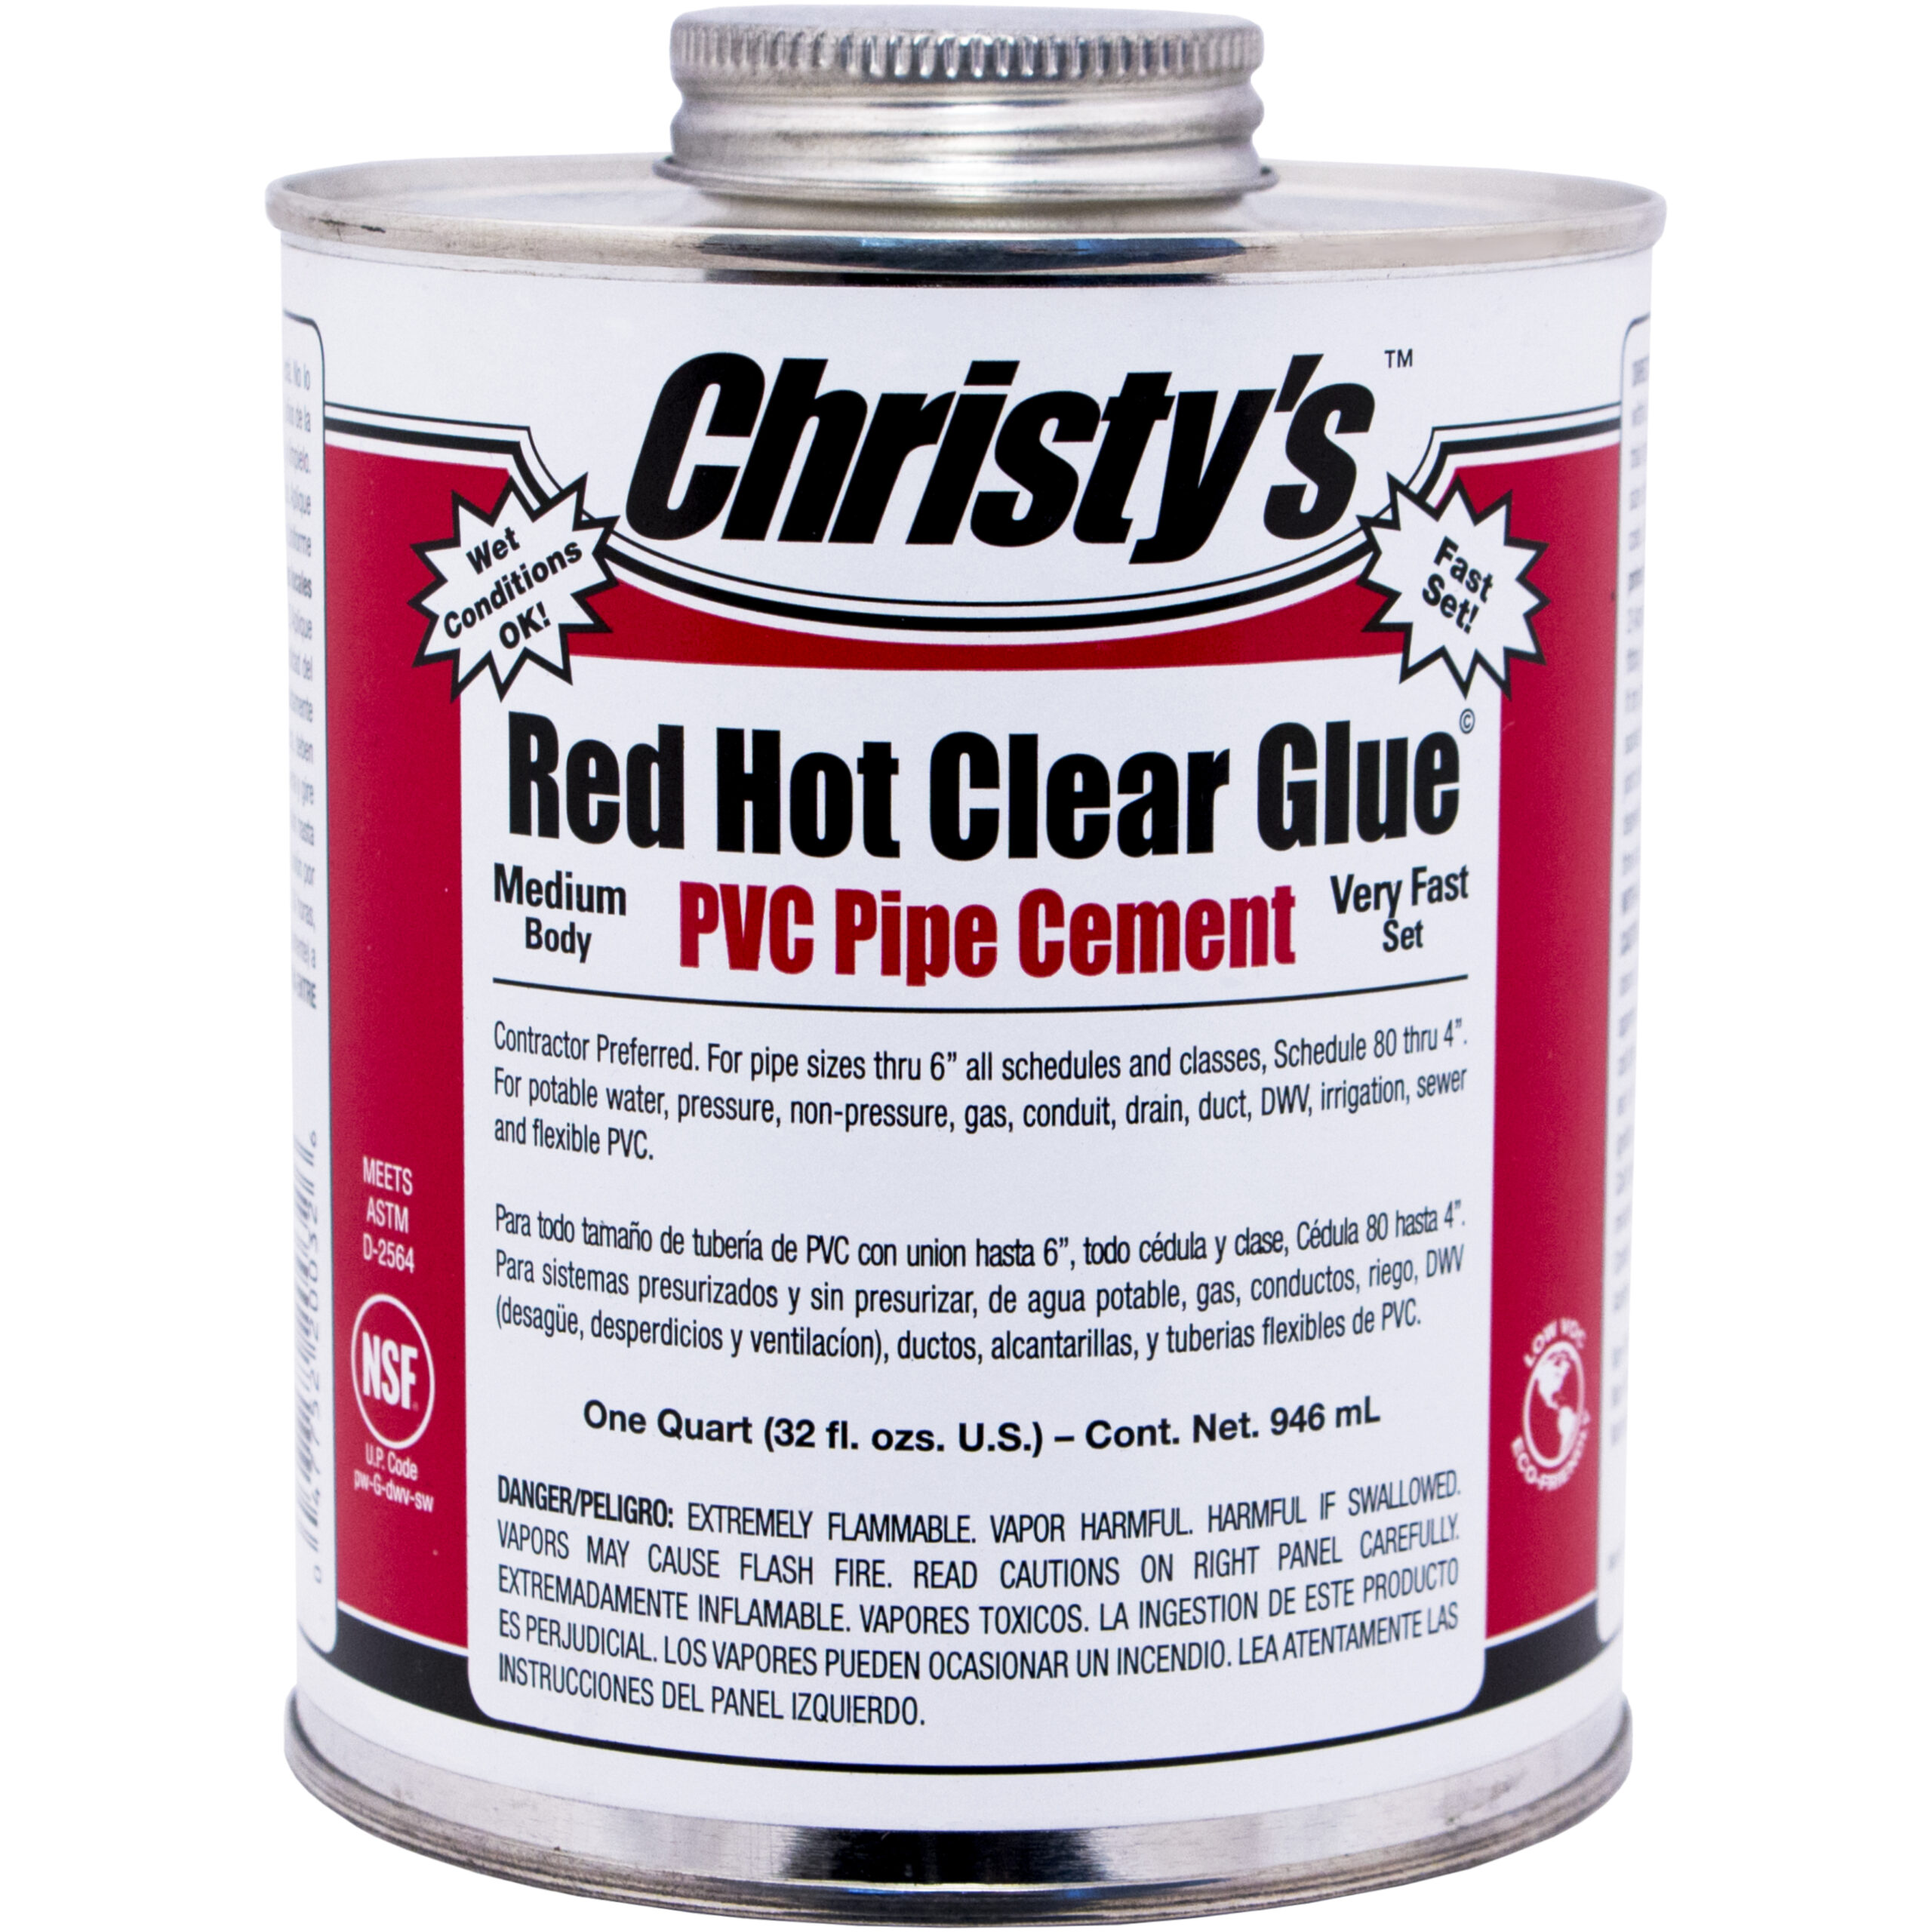 Red Hot Blue Glue - Low VOC - Christy's